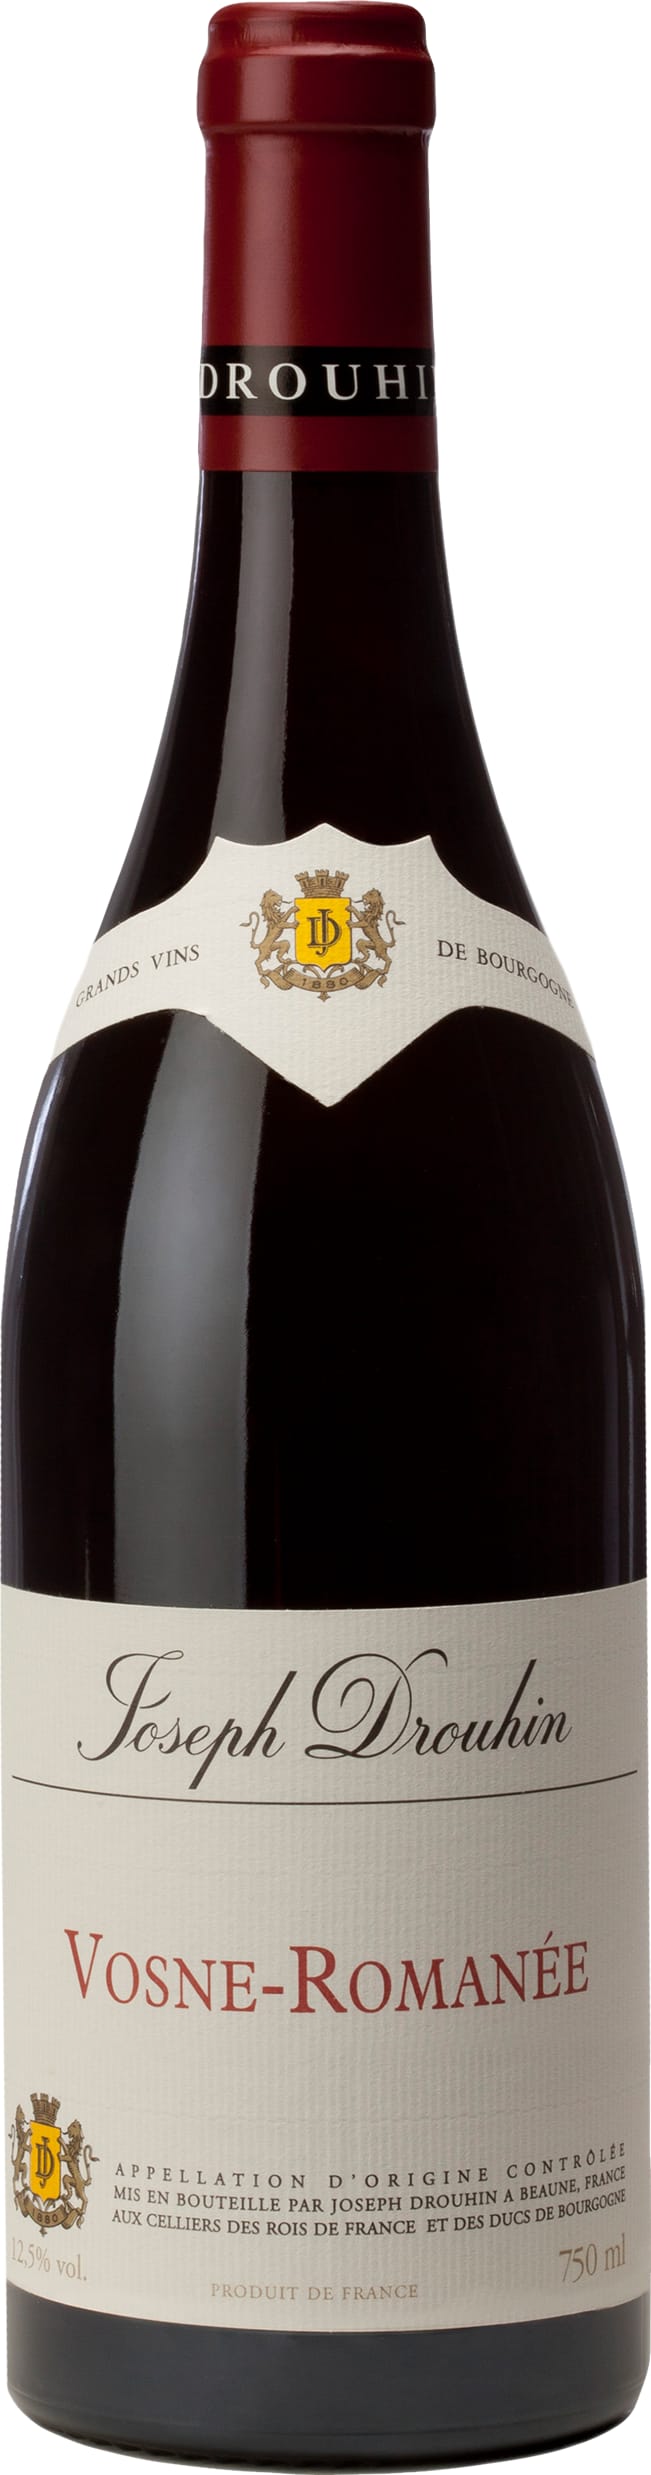 Joseph Drouhin Vosne-Romanee 2021 75cl - Buy Joseph Drouhin Wines from GREAT WINES DIRECT wine shop